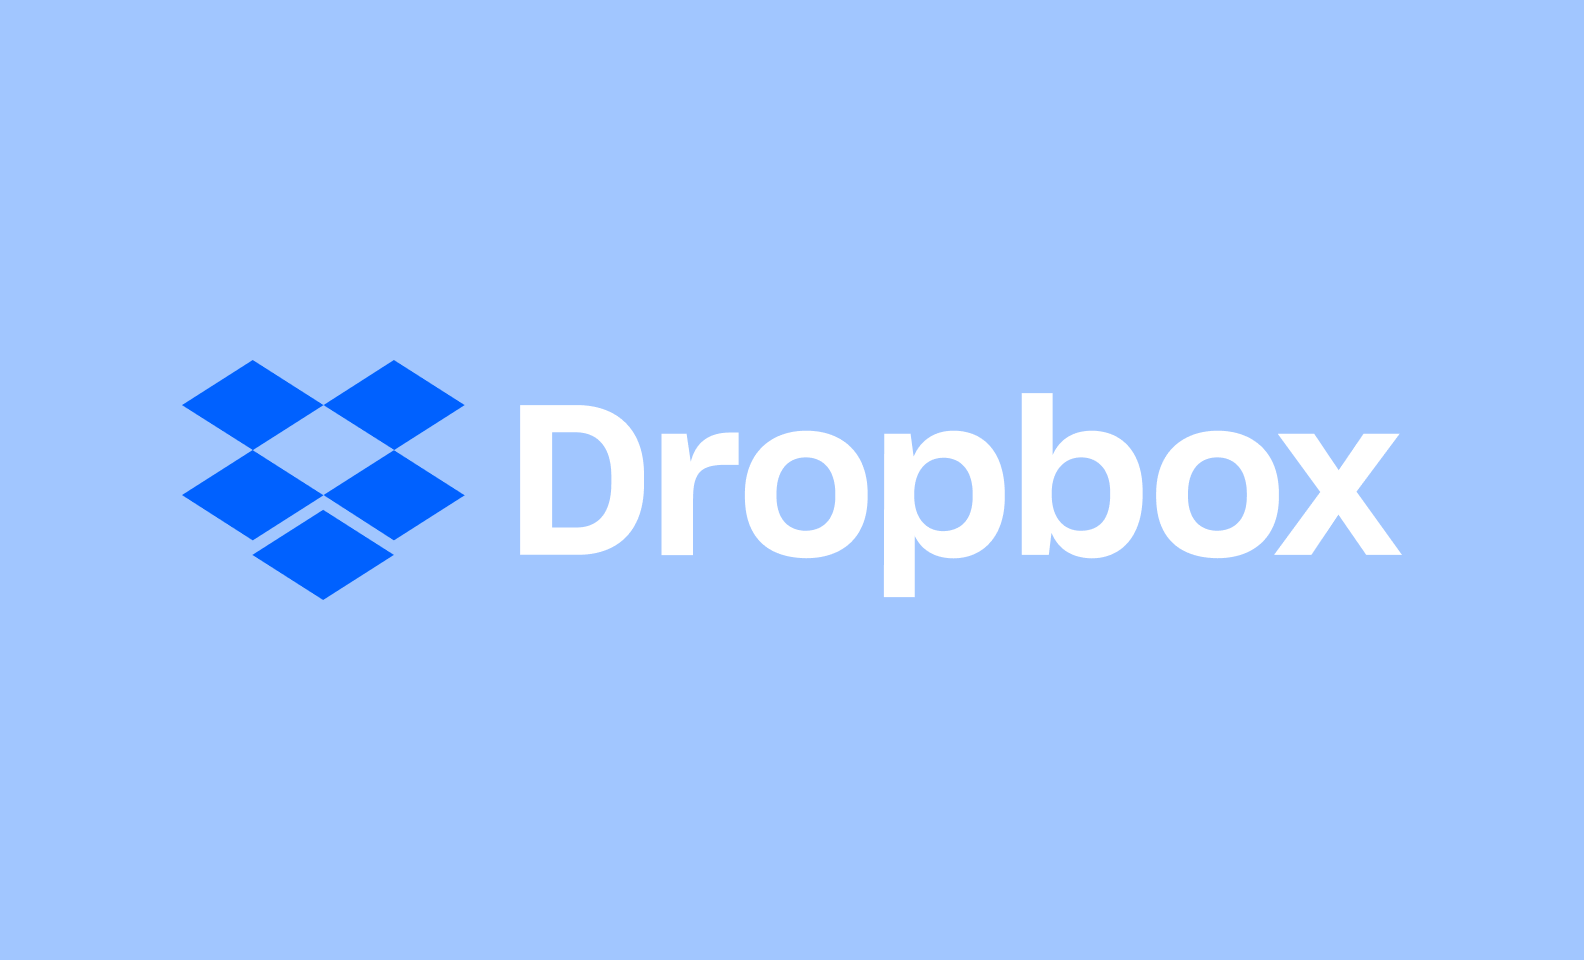 Dropbox as an example of MVP